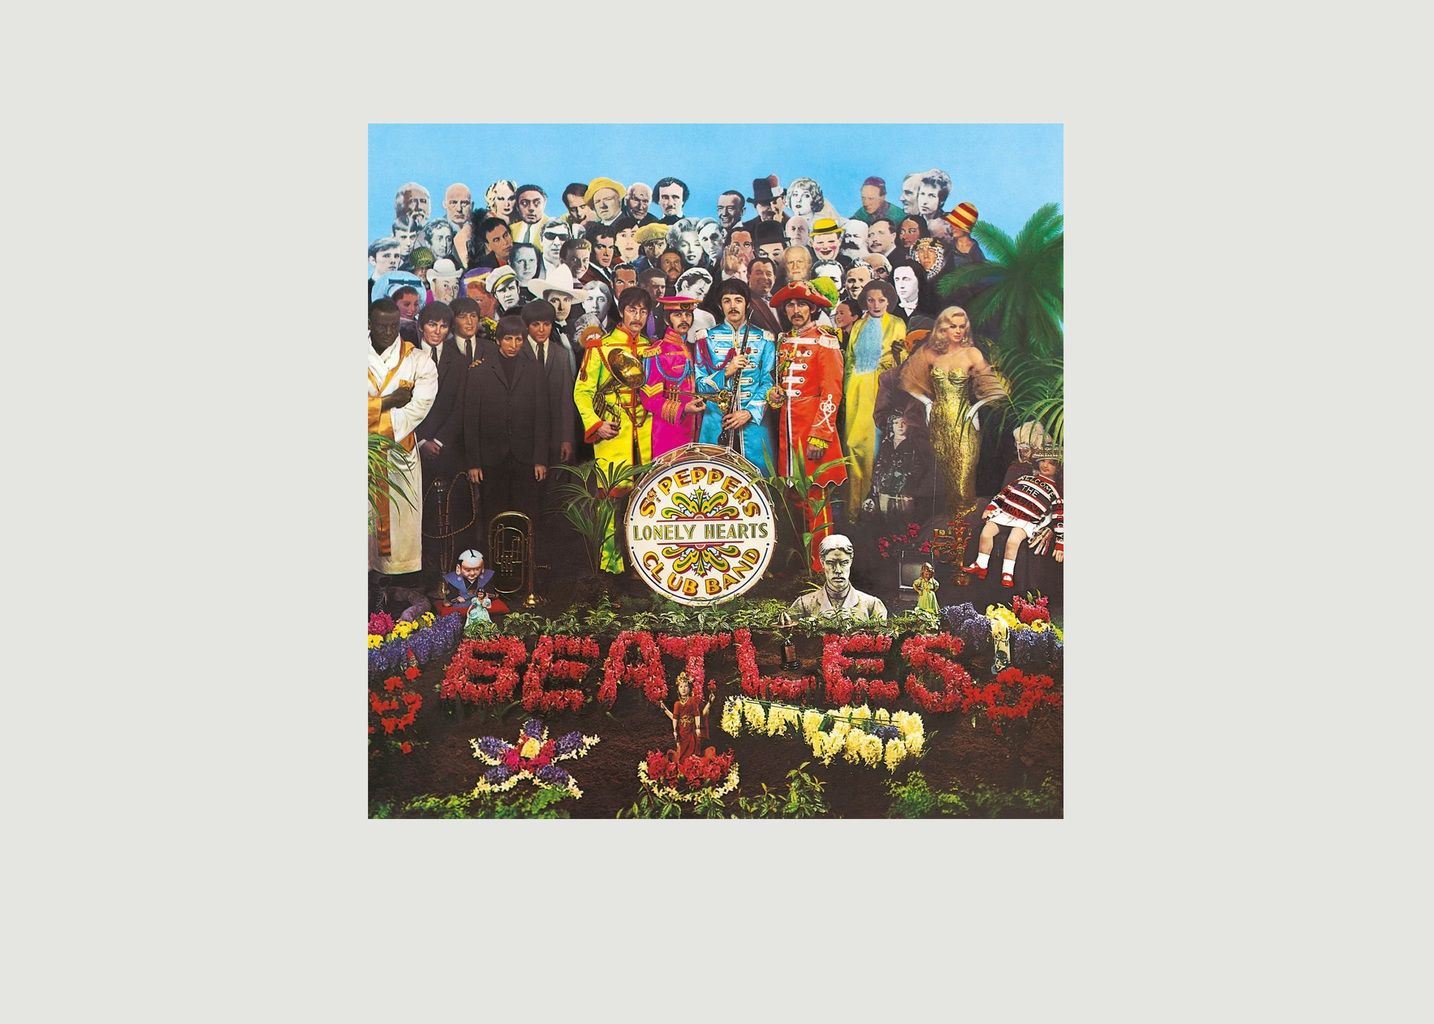 Sgt. Pepper's Lonely Hearts Club Band - The Beatles - La vinyl-thèque idéale